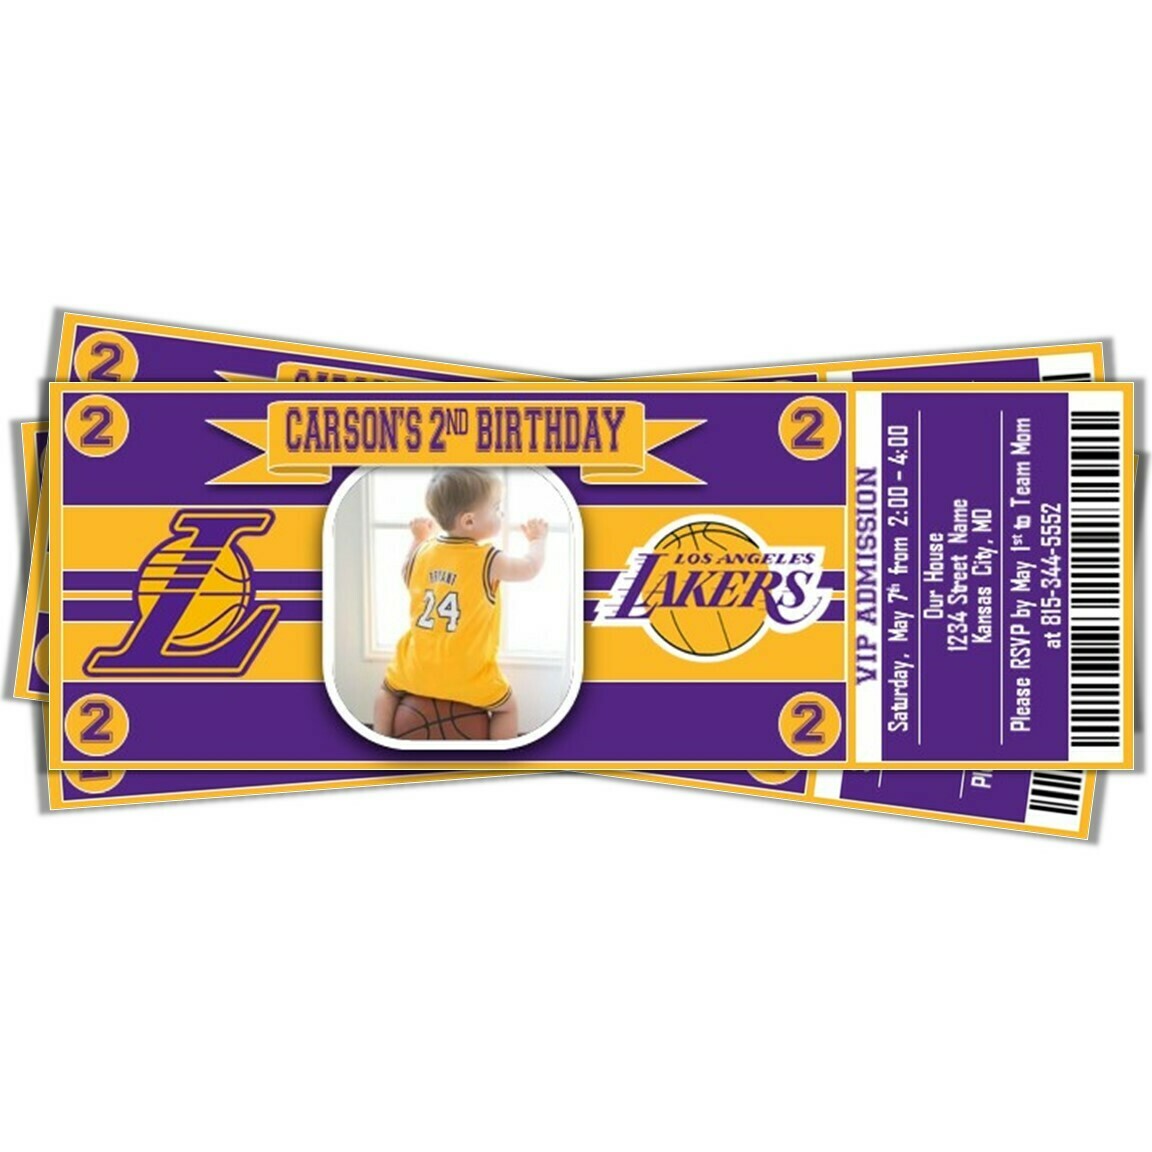 Los Angeles LA Lakers Photo NBA Basketball Birthday Invitation Ticket Style  - radiozona.com.ar